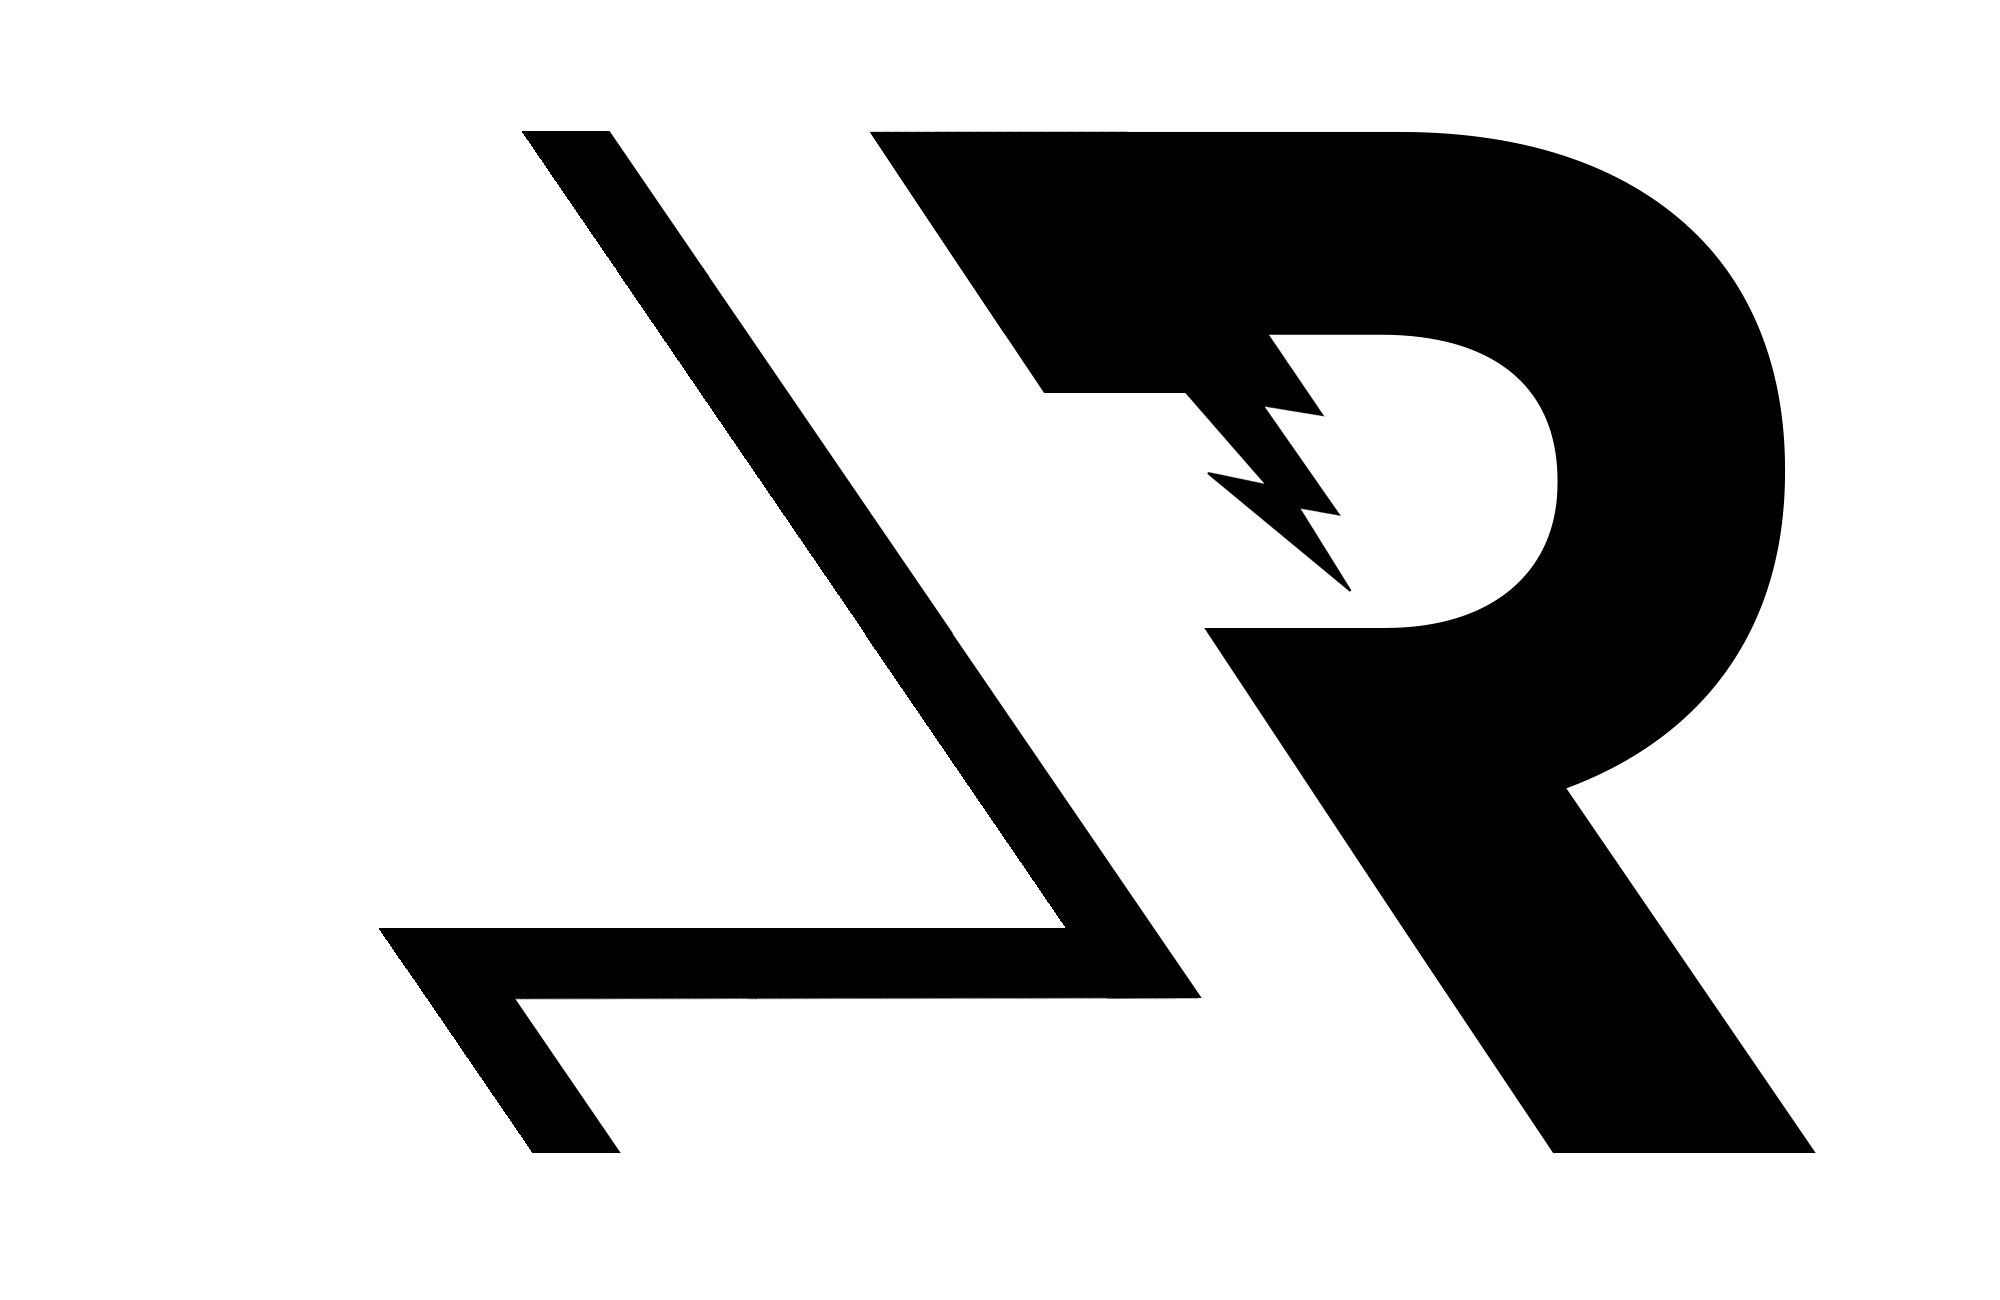 JR logo_simplified.png